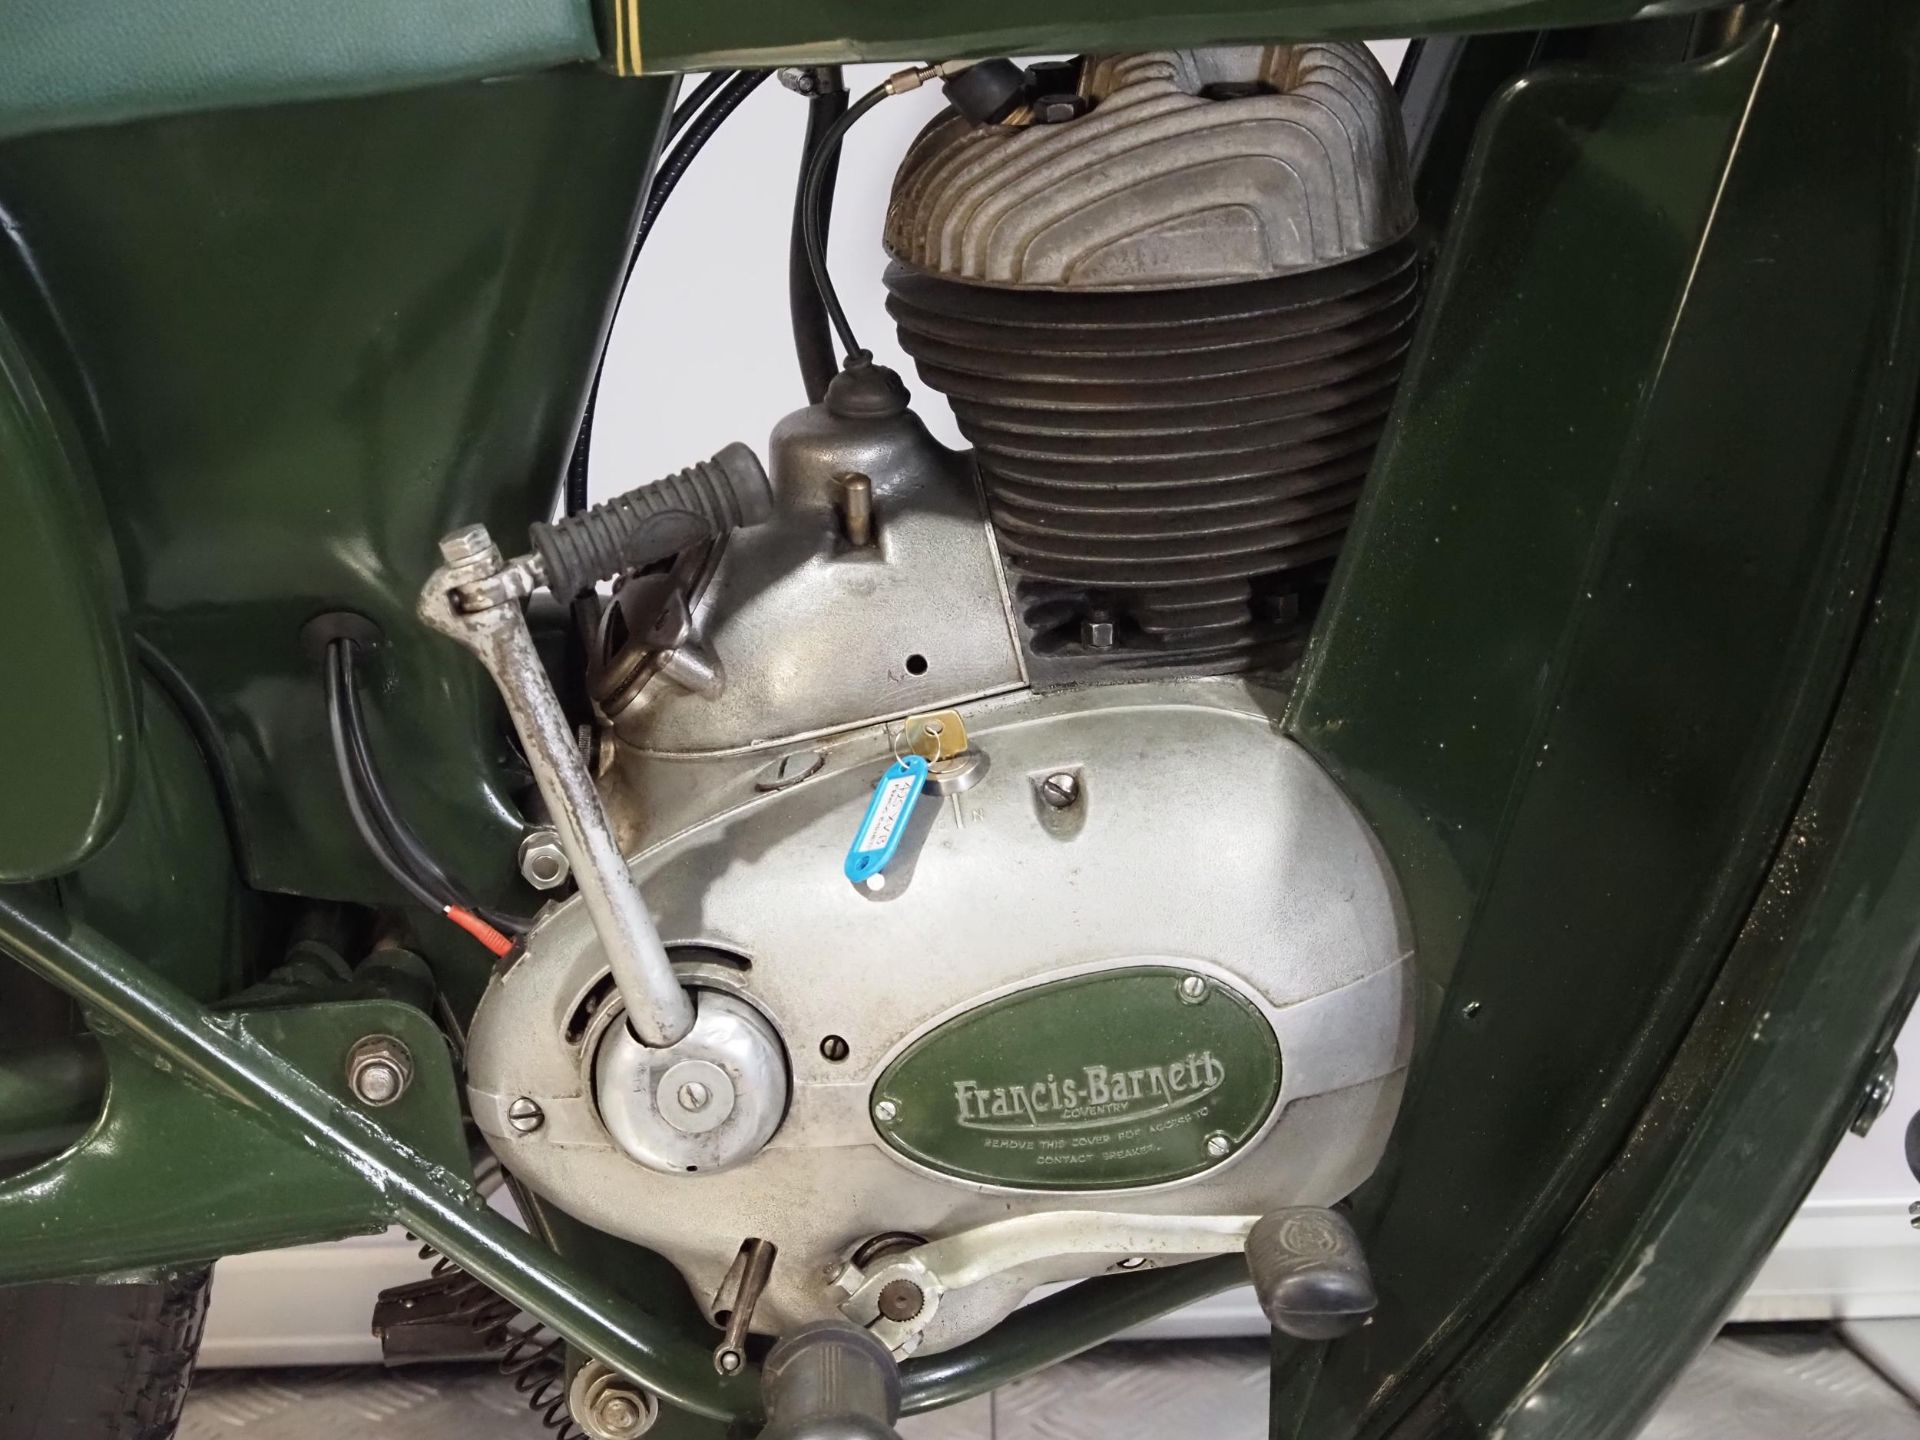 Fancis Barnett Cruiser 75 motorcycle. 1956. 225cc. Frame No. WB14383 Engine No. 842A/1138 Runs and - Image 4 of 6